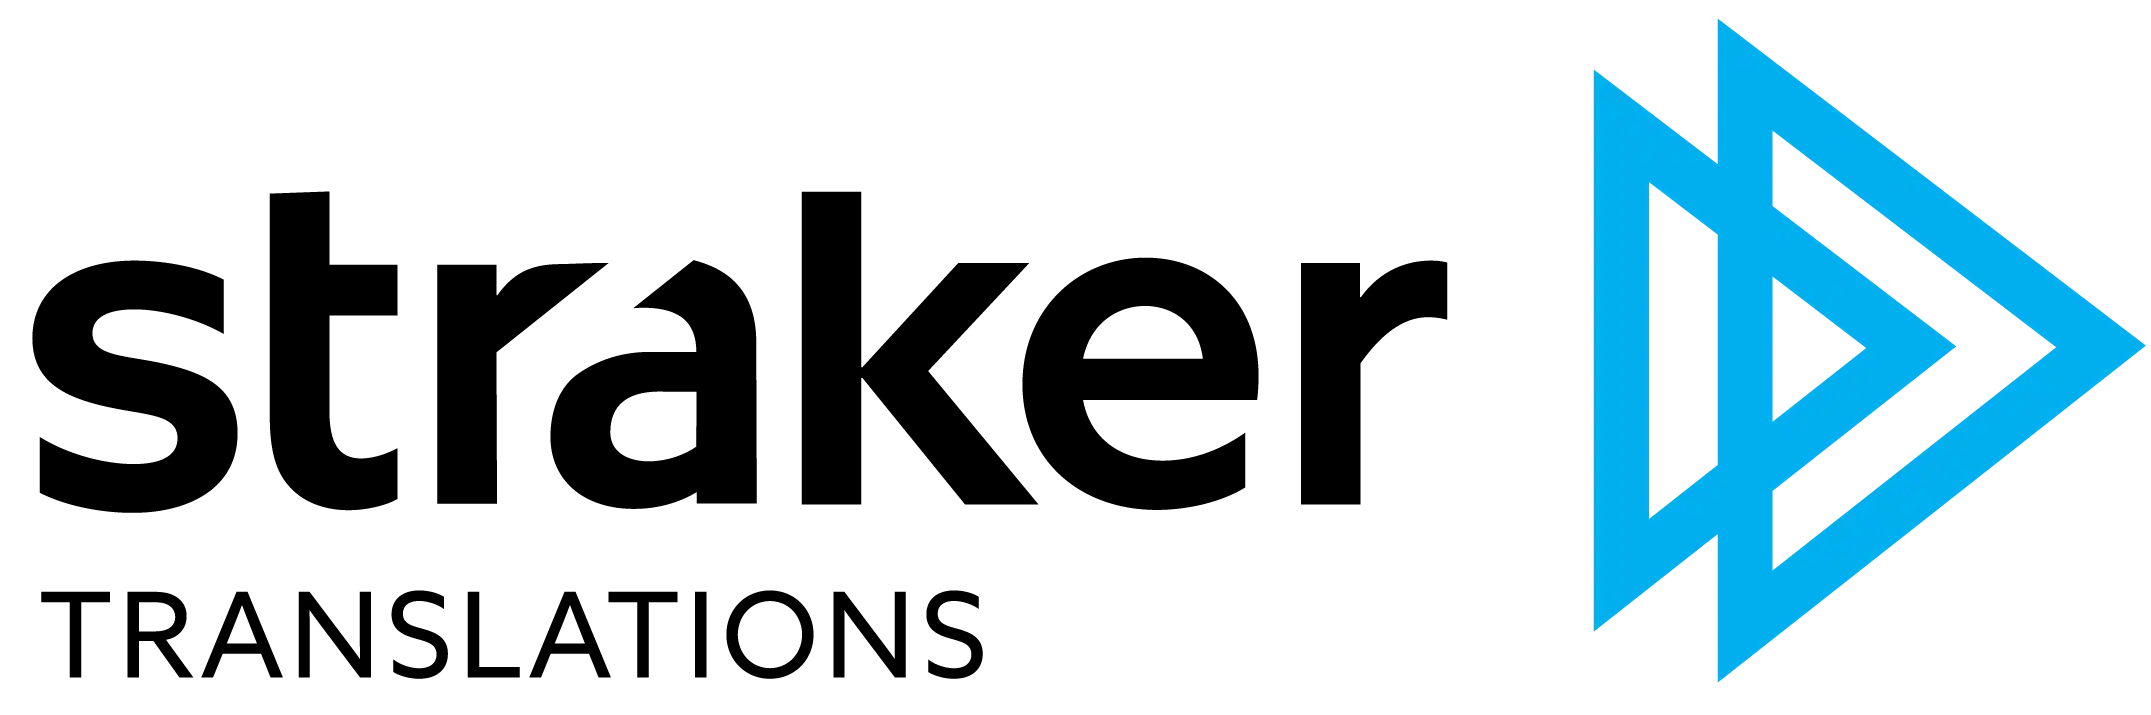 Straker Translations logo